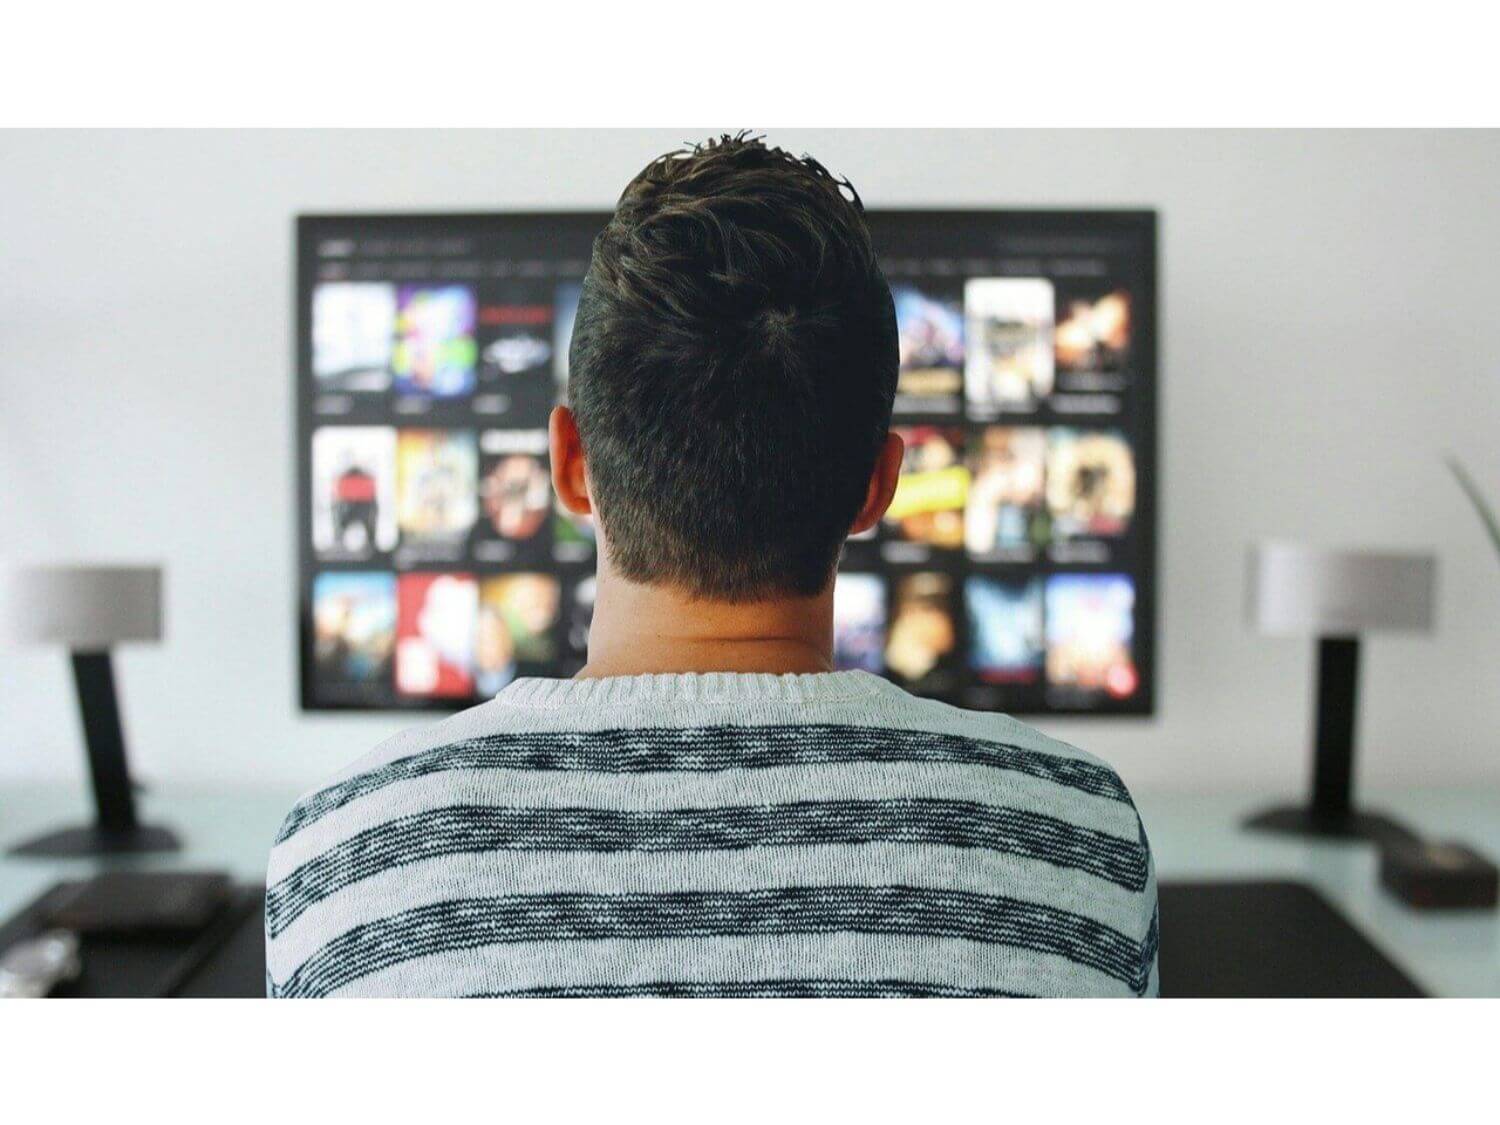 A man watching TV